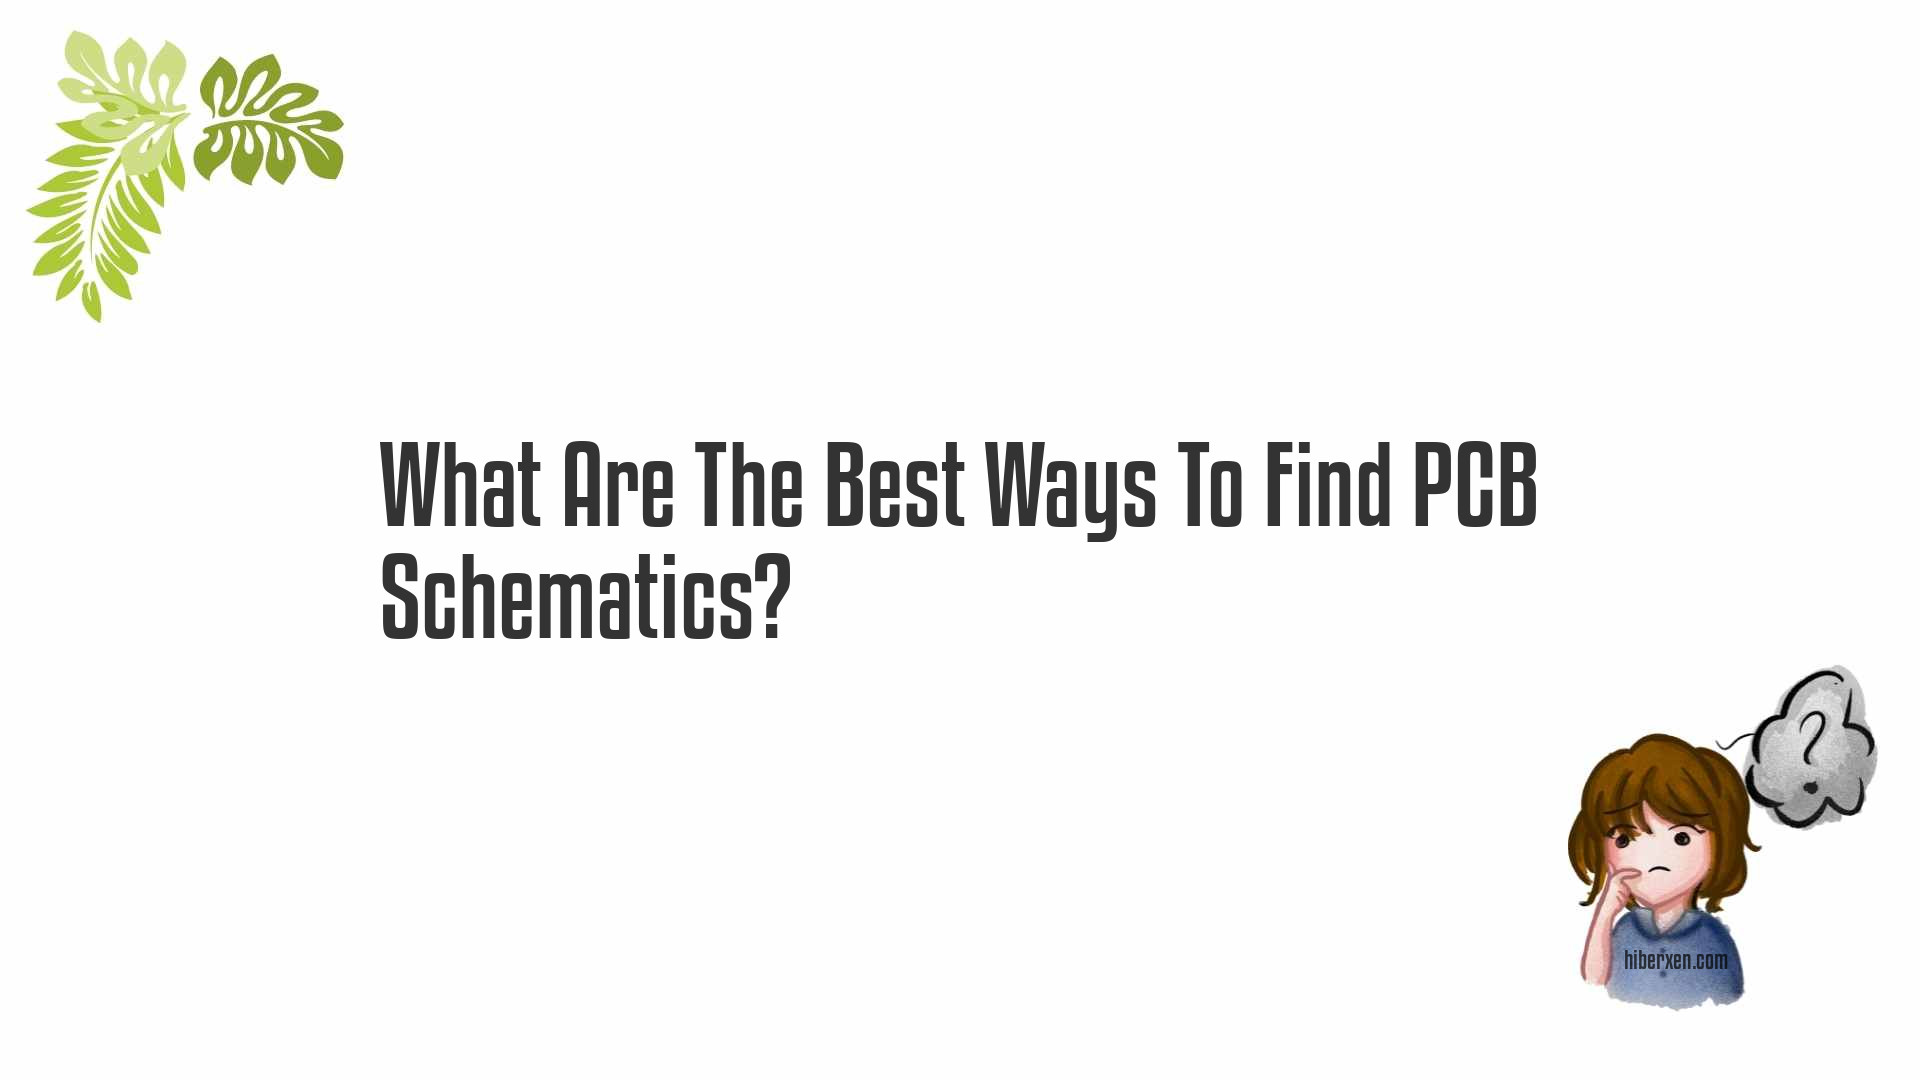 What Are The Best Ways To Find PCB Schematics?